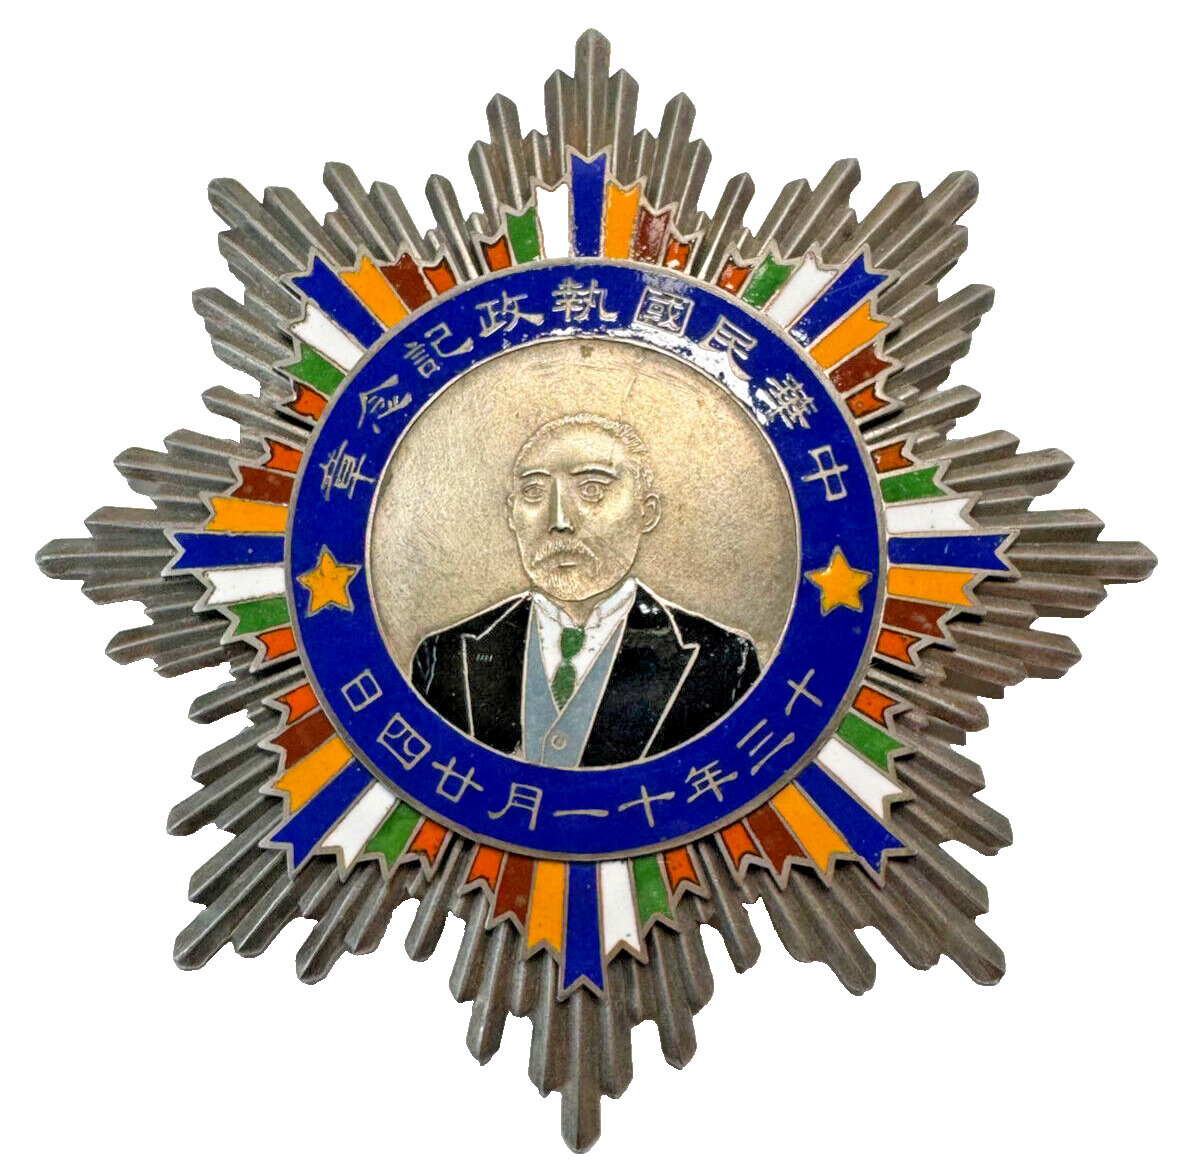 The Republic of China Presidential Commemorative Medal for President Duan Qirui